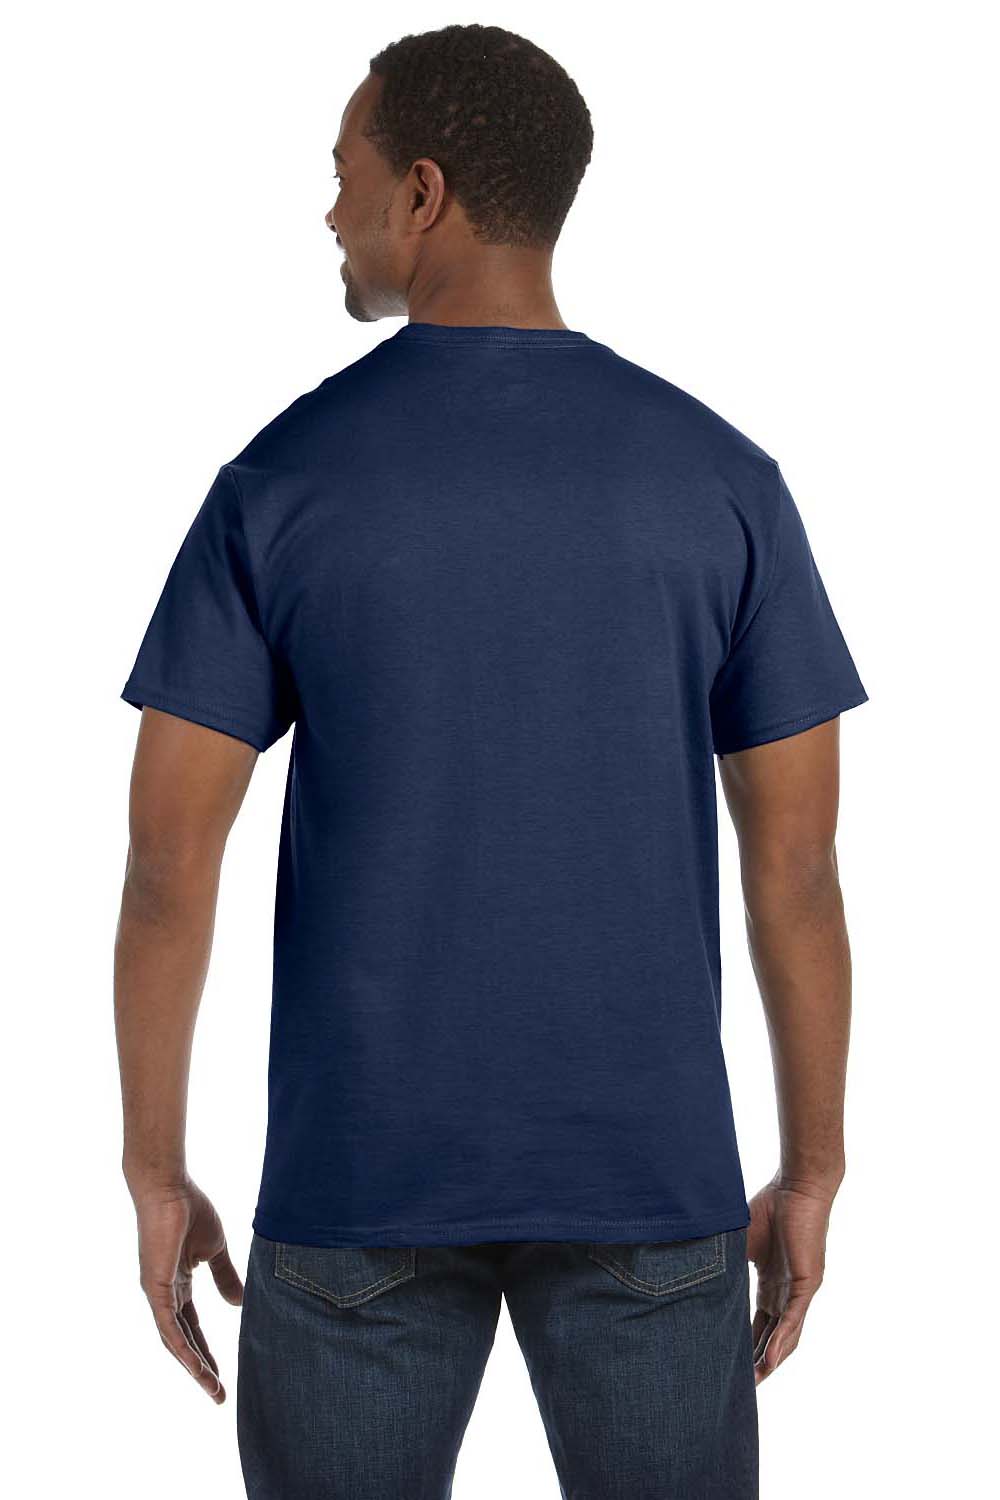 Jerzees 29M Mens Dri-Power Moisture Wicking Short Sleeve Crewneck T-Shirt Navy Blue Back